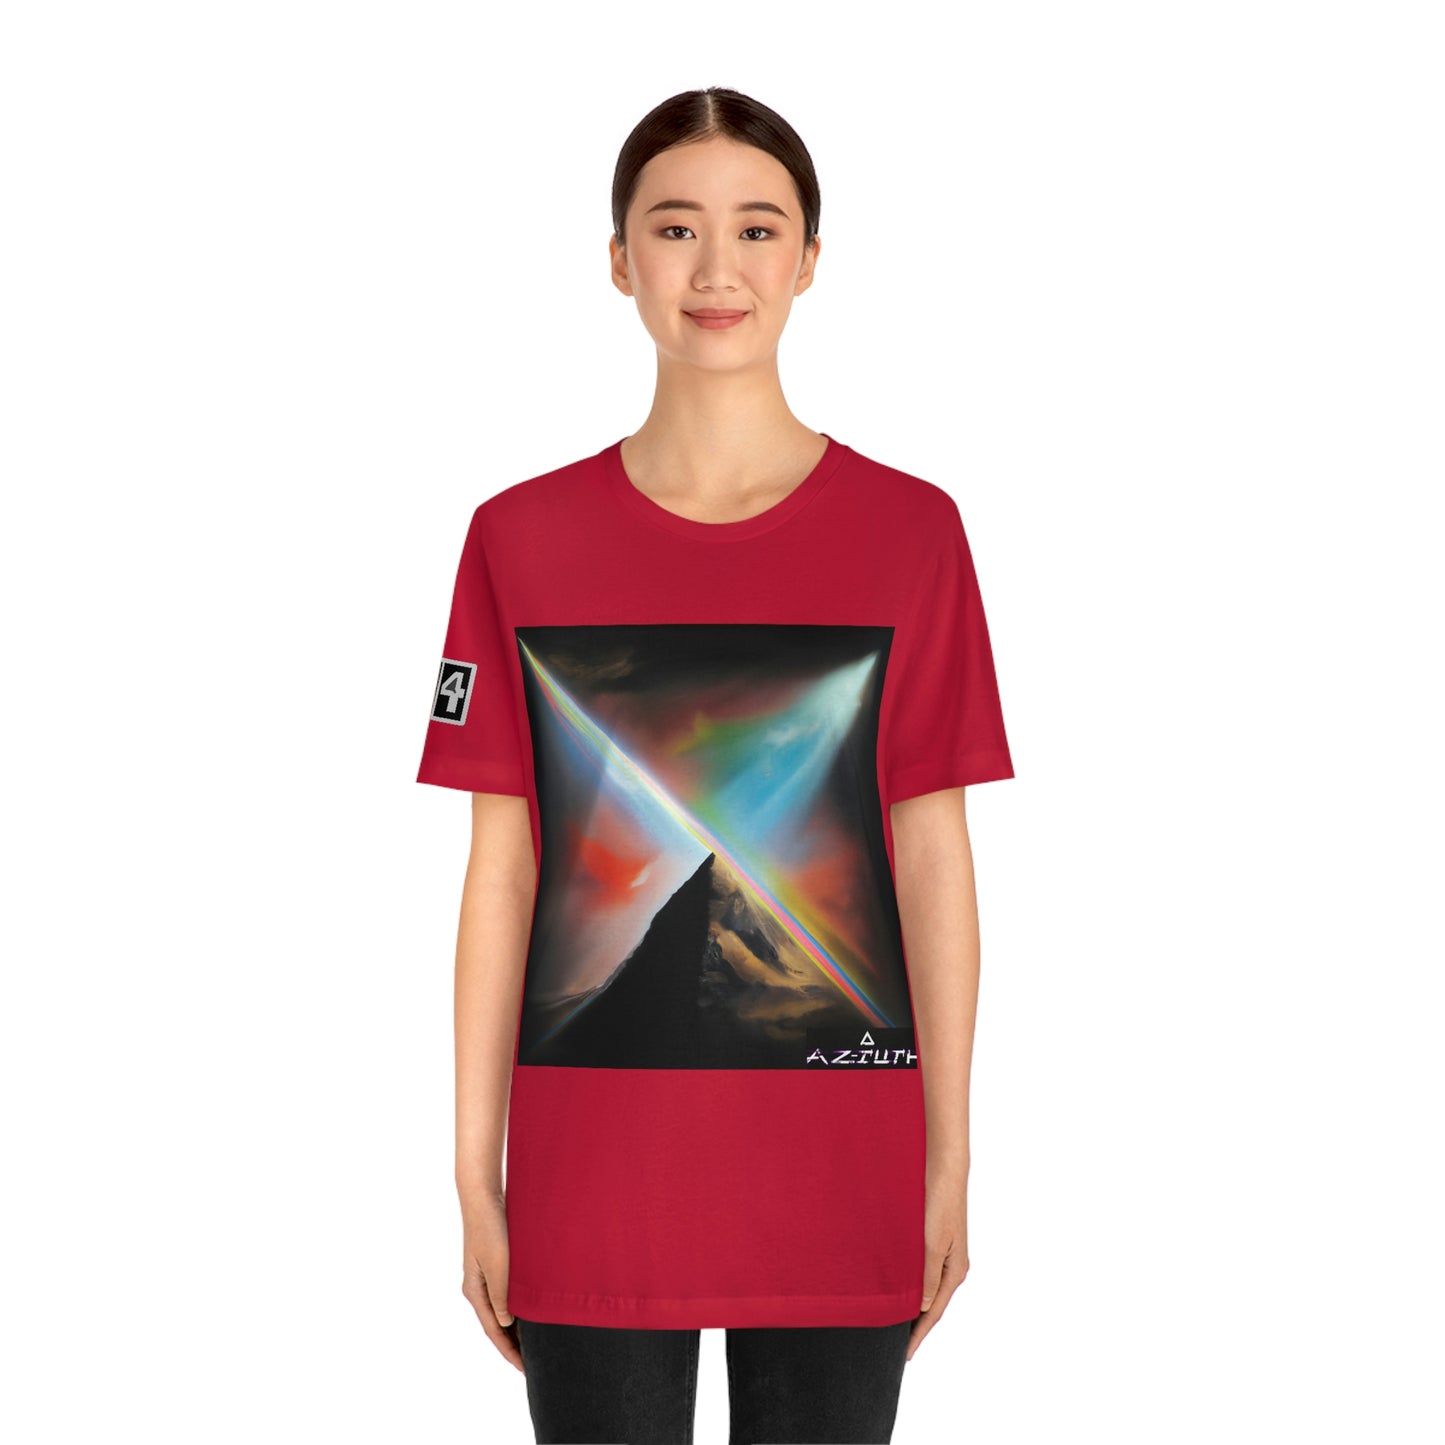 Atziluth Gallery "Light Pyramid" T-shirt